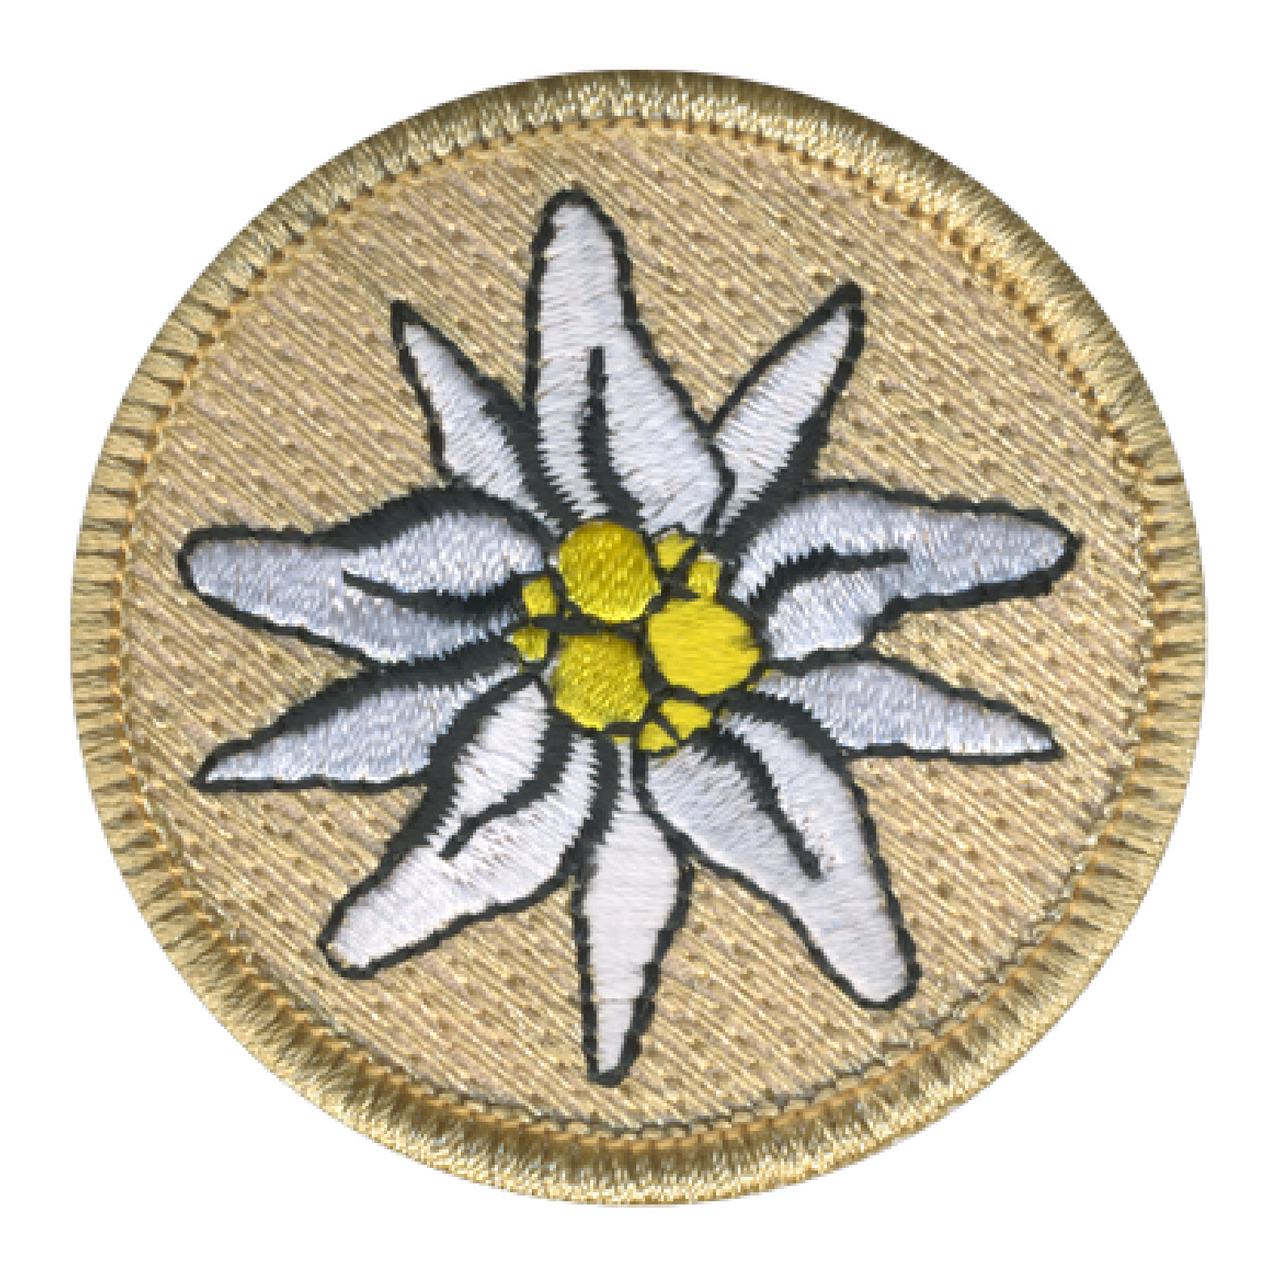 Edelweiss Flower Scout Patrol Patch